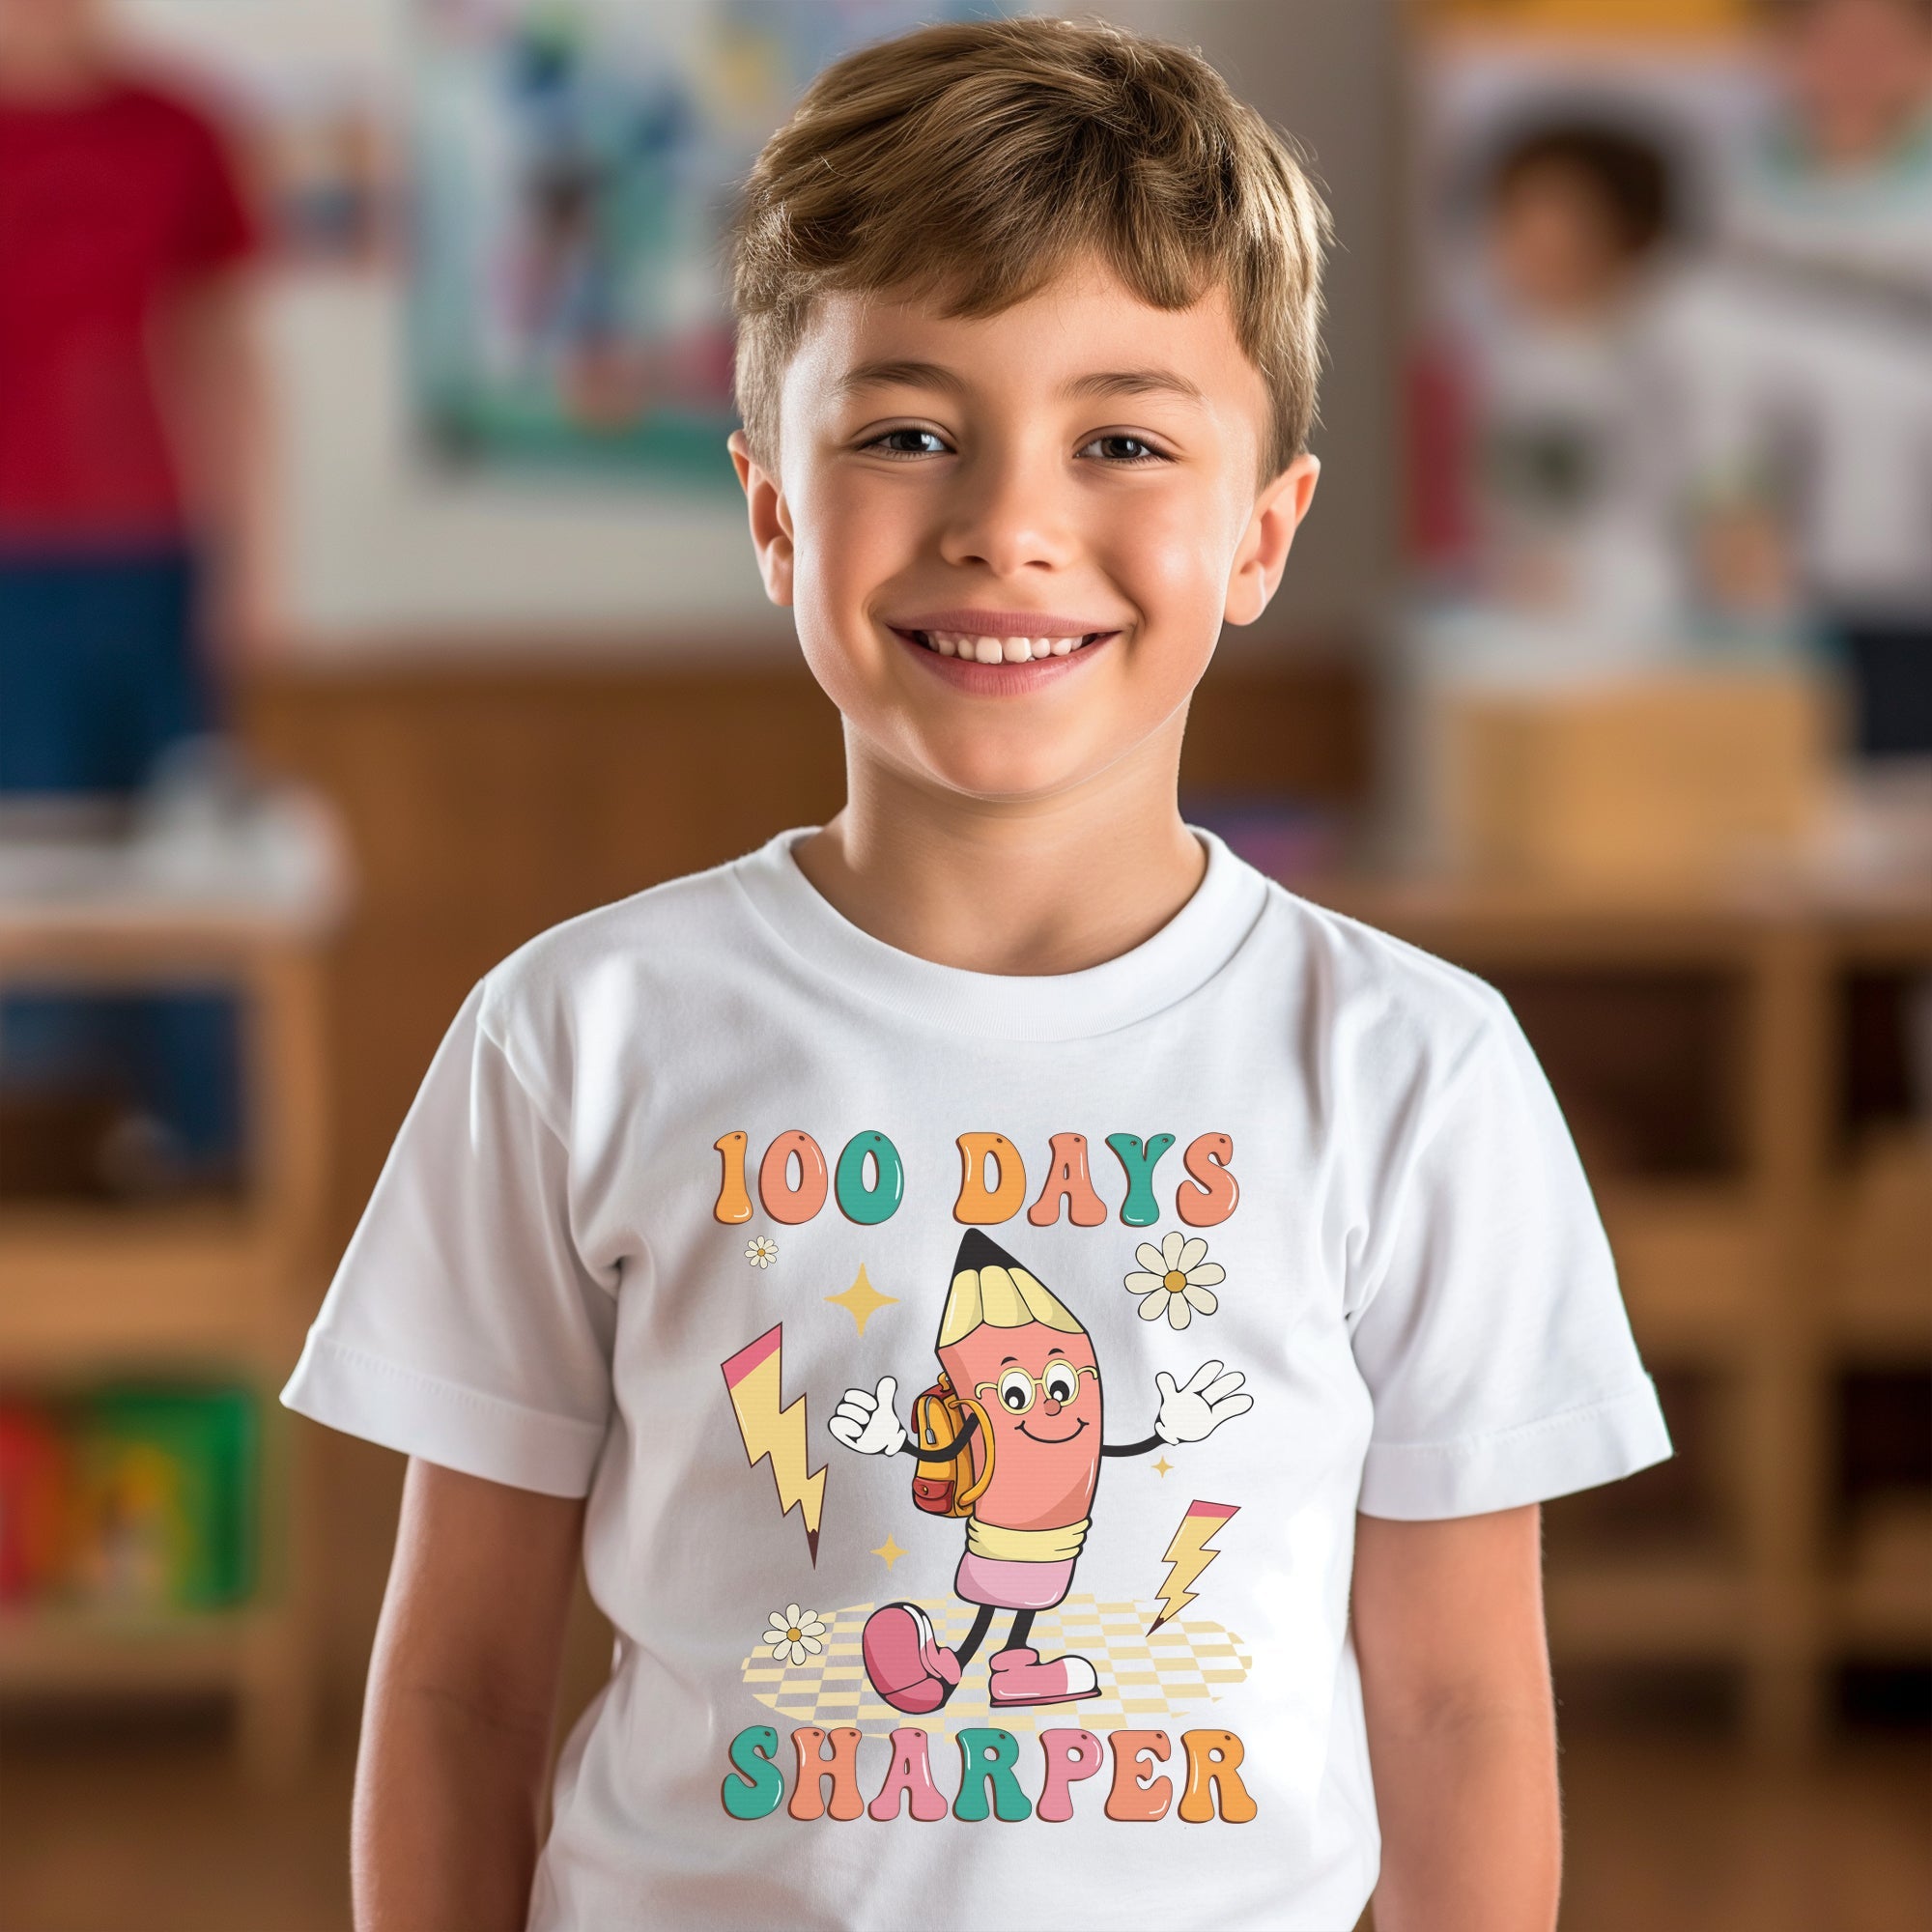 100 Days of School Kids T-Shirt 1191